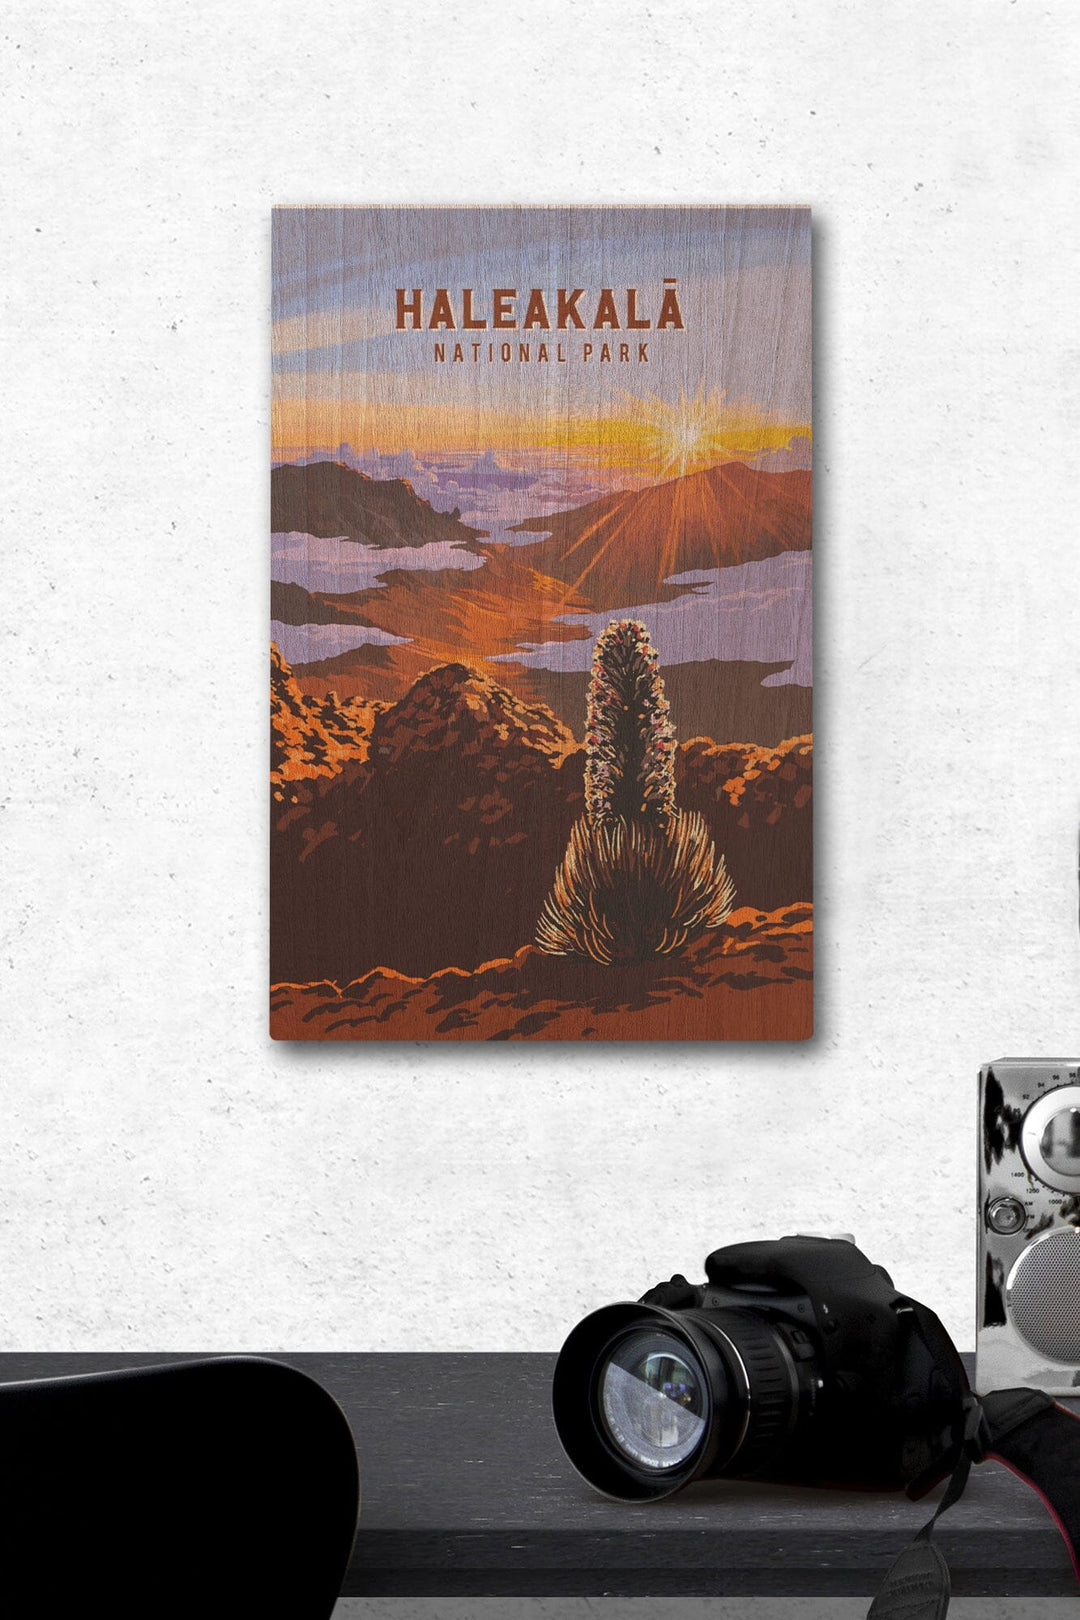 Haleakala National Park, Hawaii, Painterly National Park Series, Wood Signs and Postcards Wood Lantern Press 12 x 18 Wood Gallery Print 